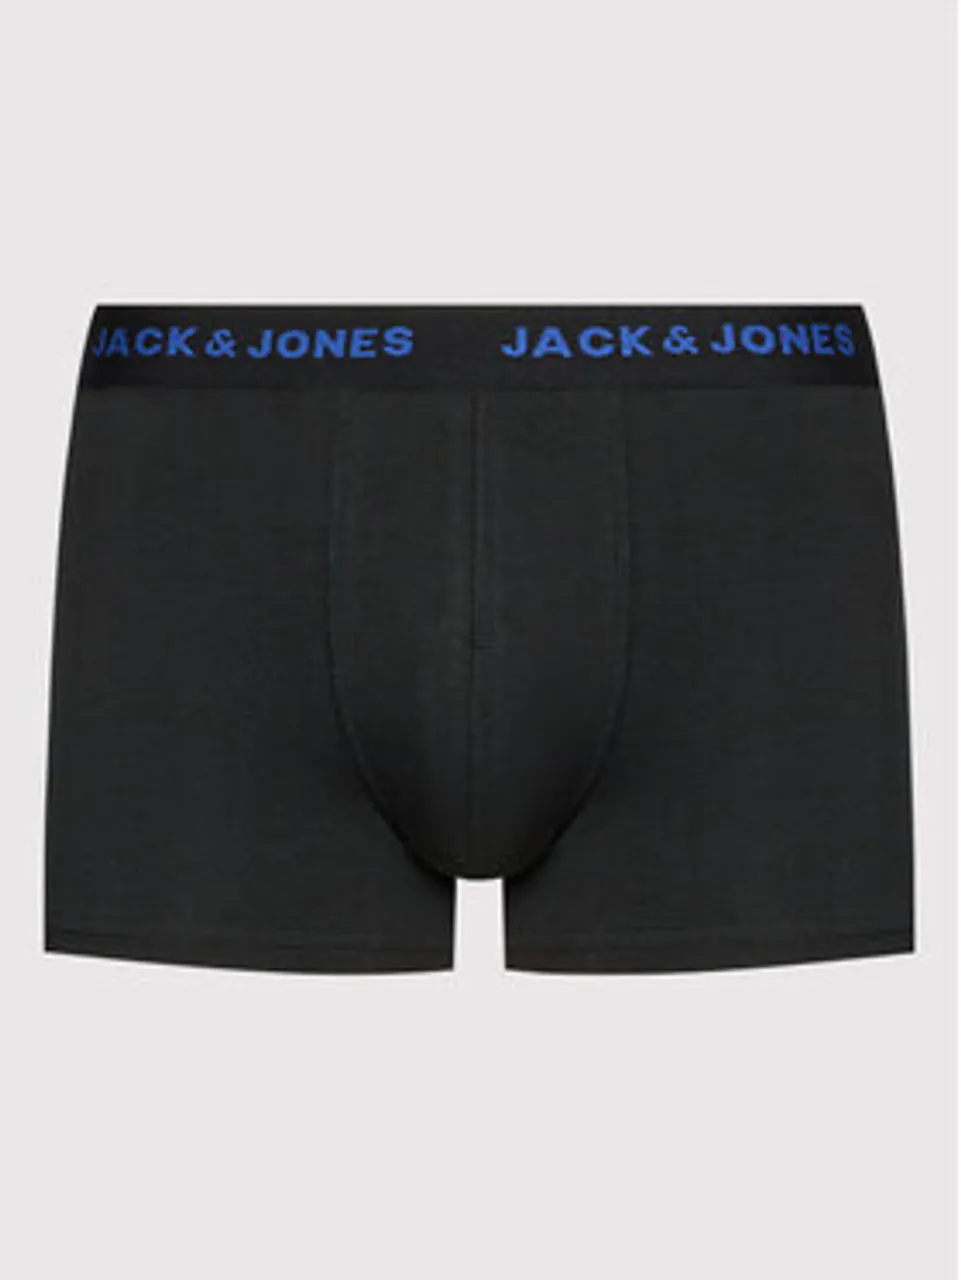 Jack&Jones 7er-Set Boxershorts Basic 12165587 Schwarz